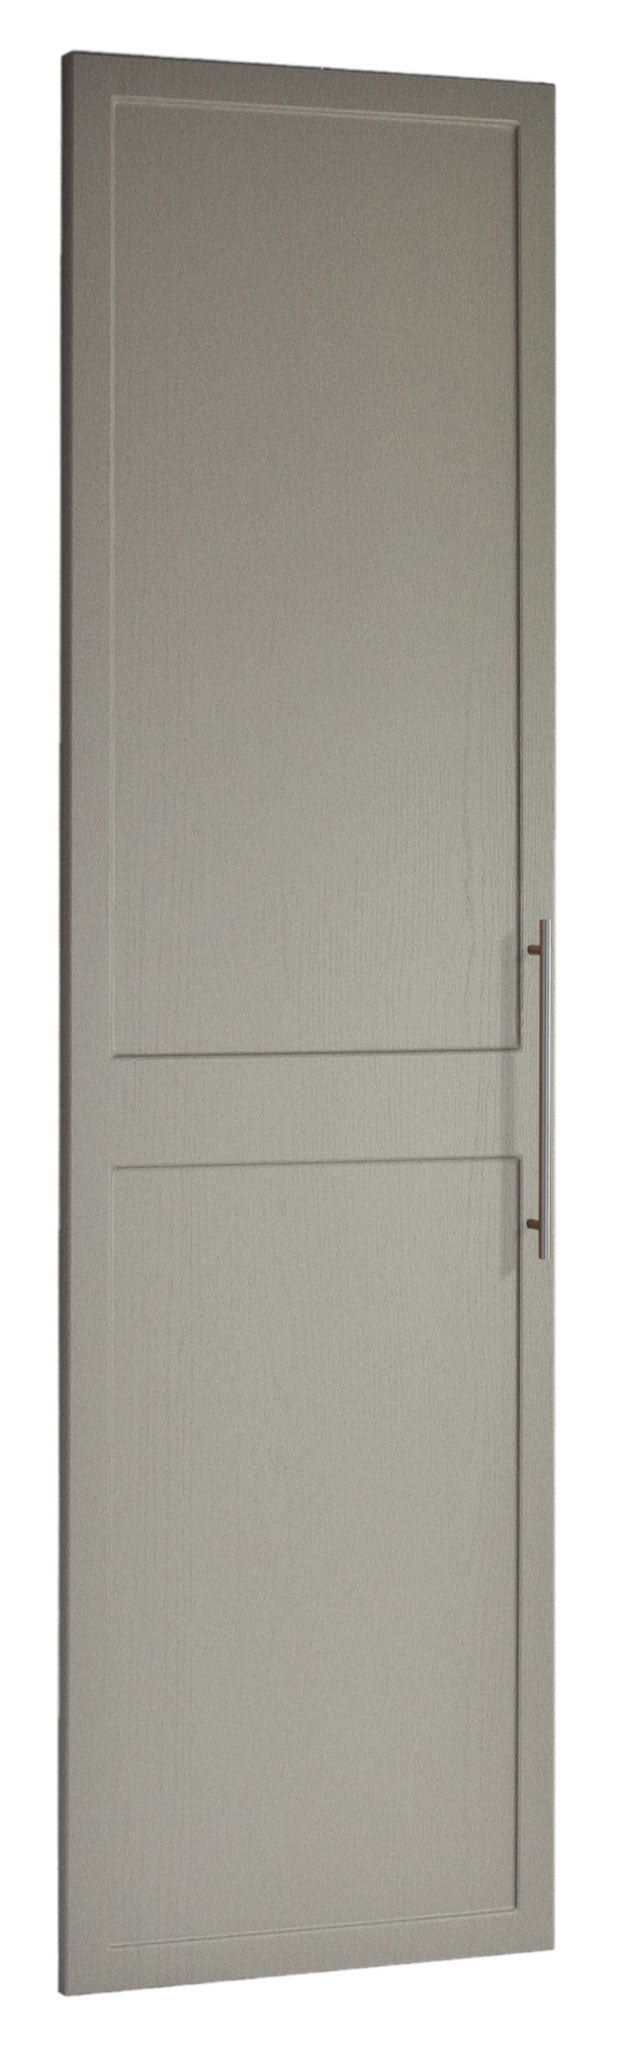 Balmoral style cupboard door in RAL shade